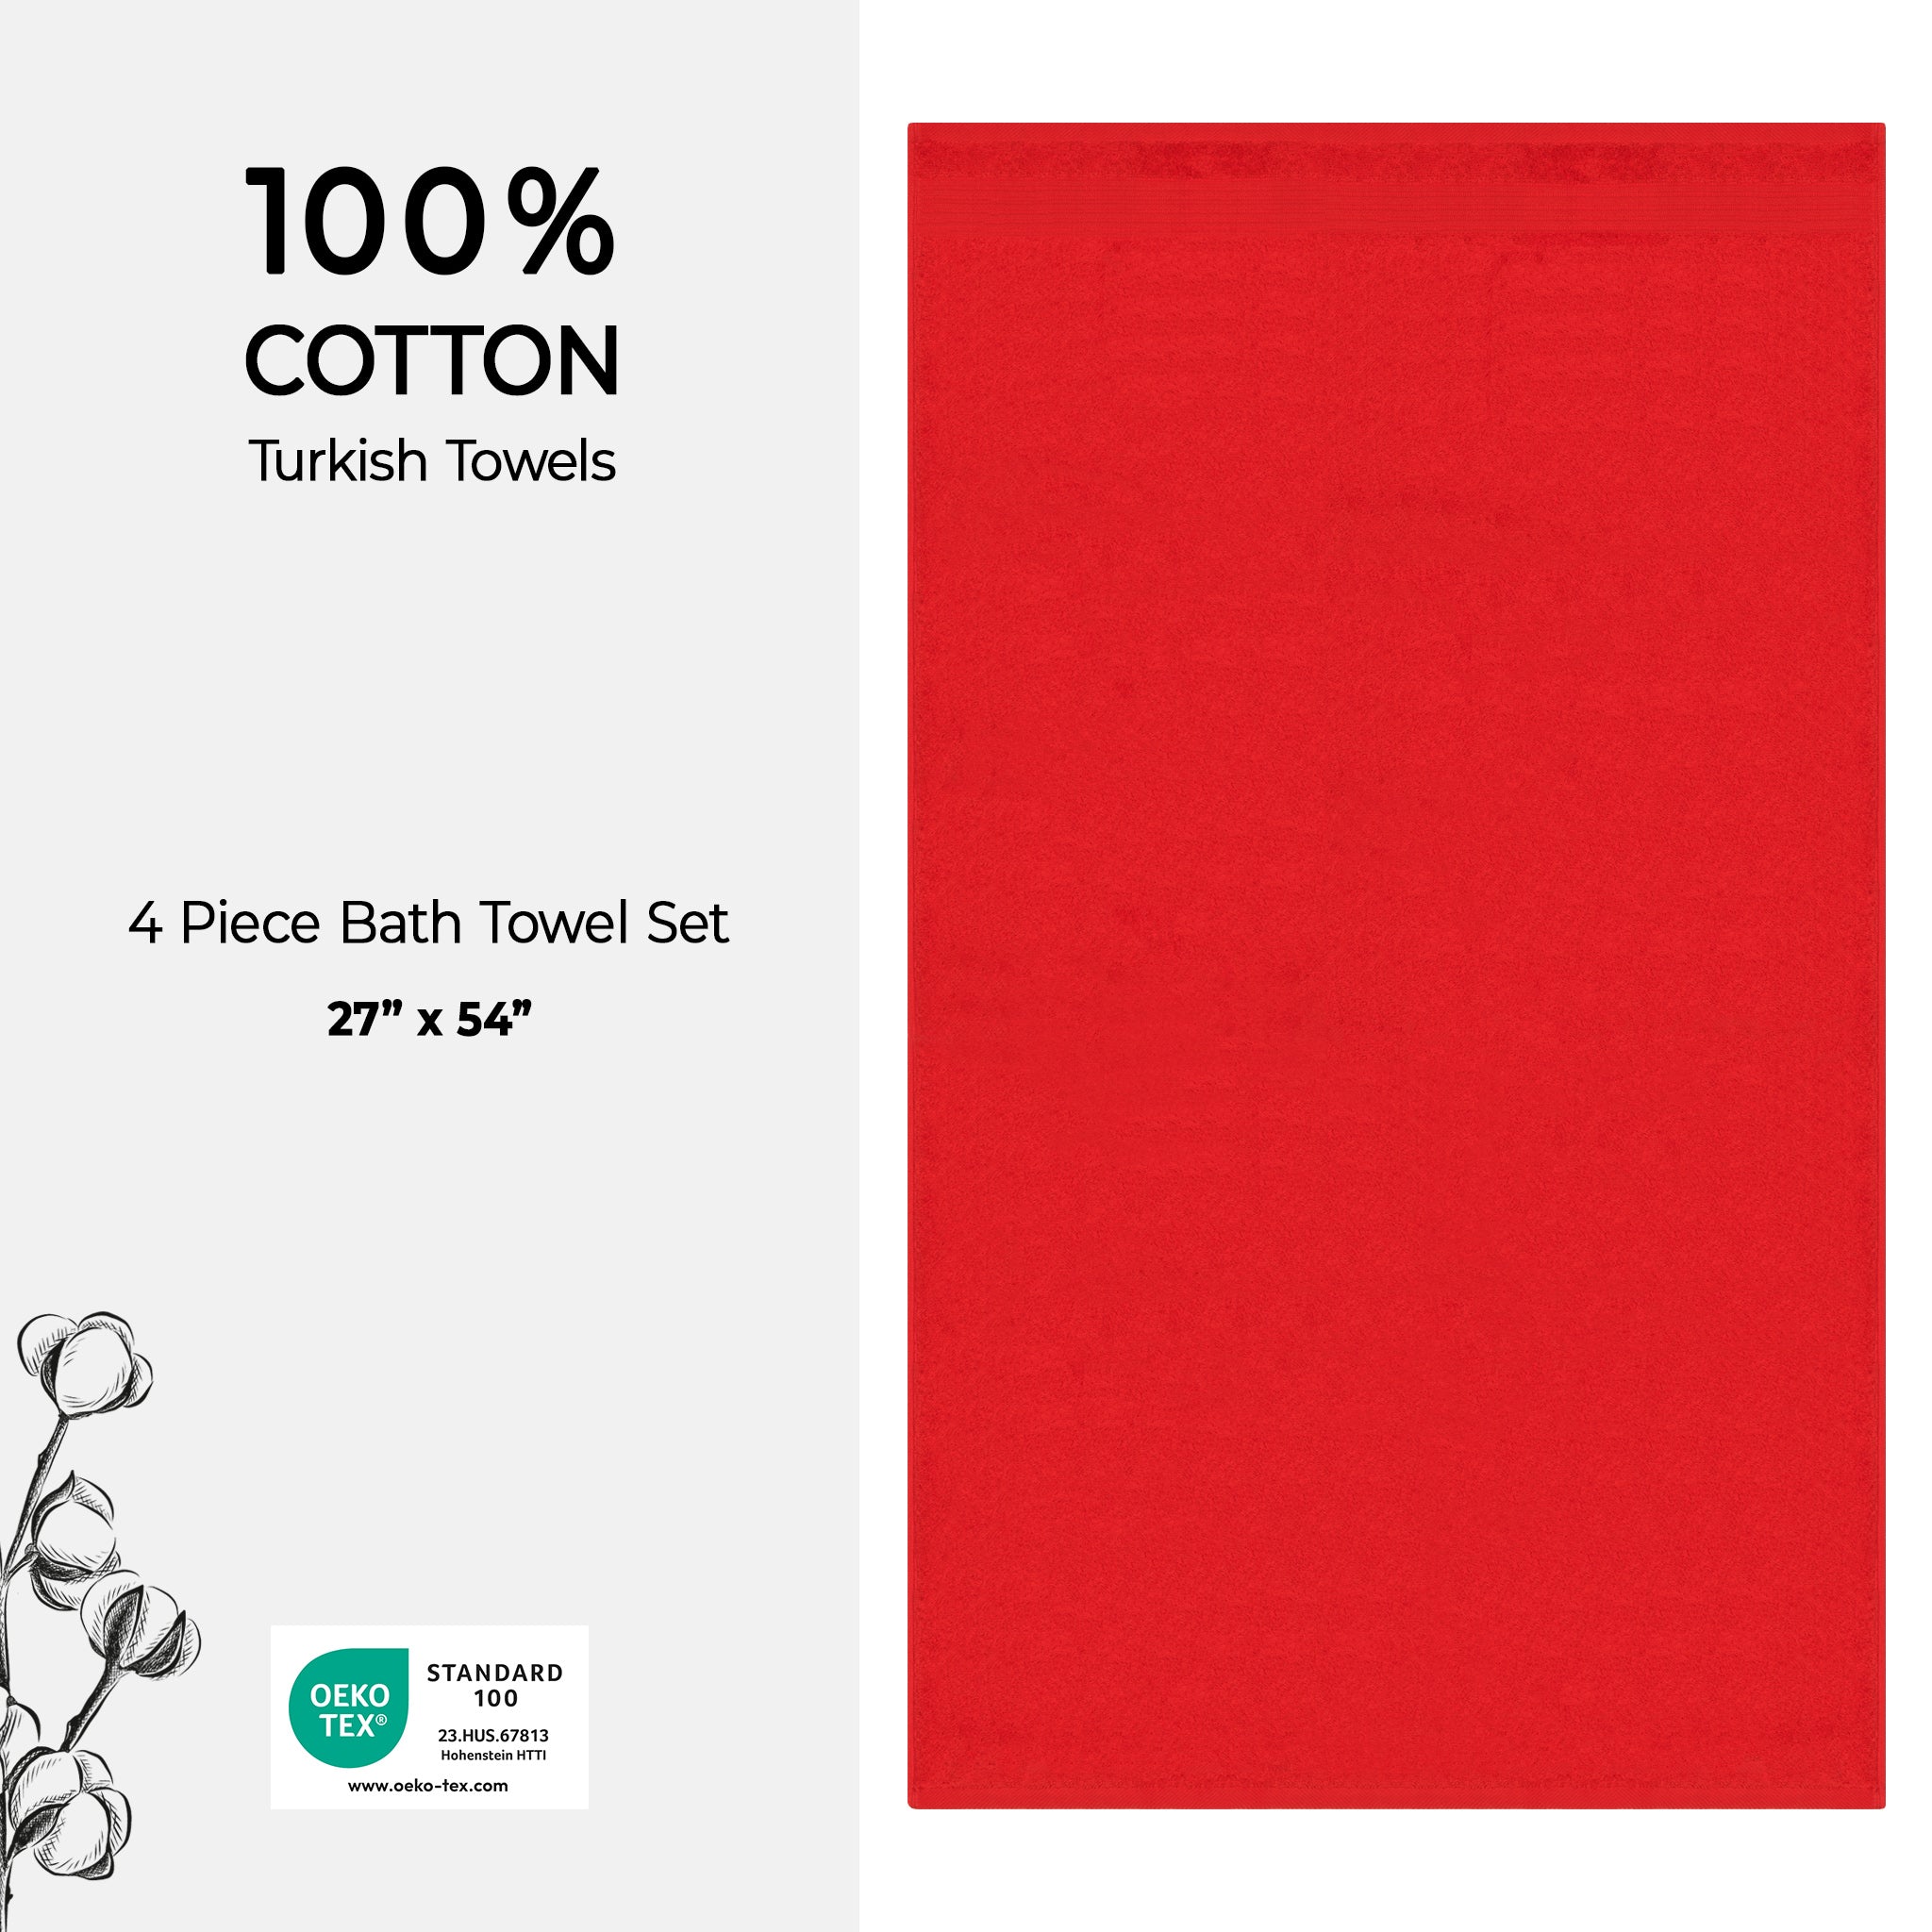 American Soft Linen Bekos 100% Cotton Turkish Towels, 4 Piece Bath Towel Set -red-04